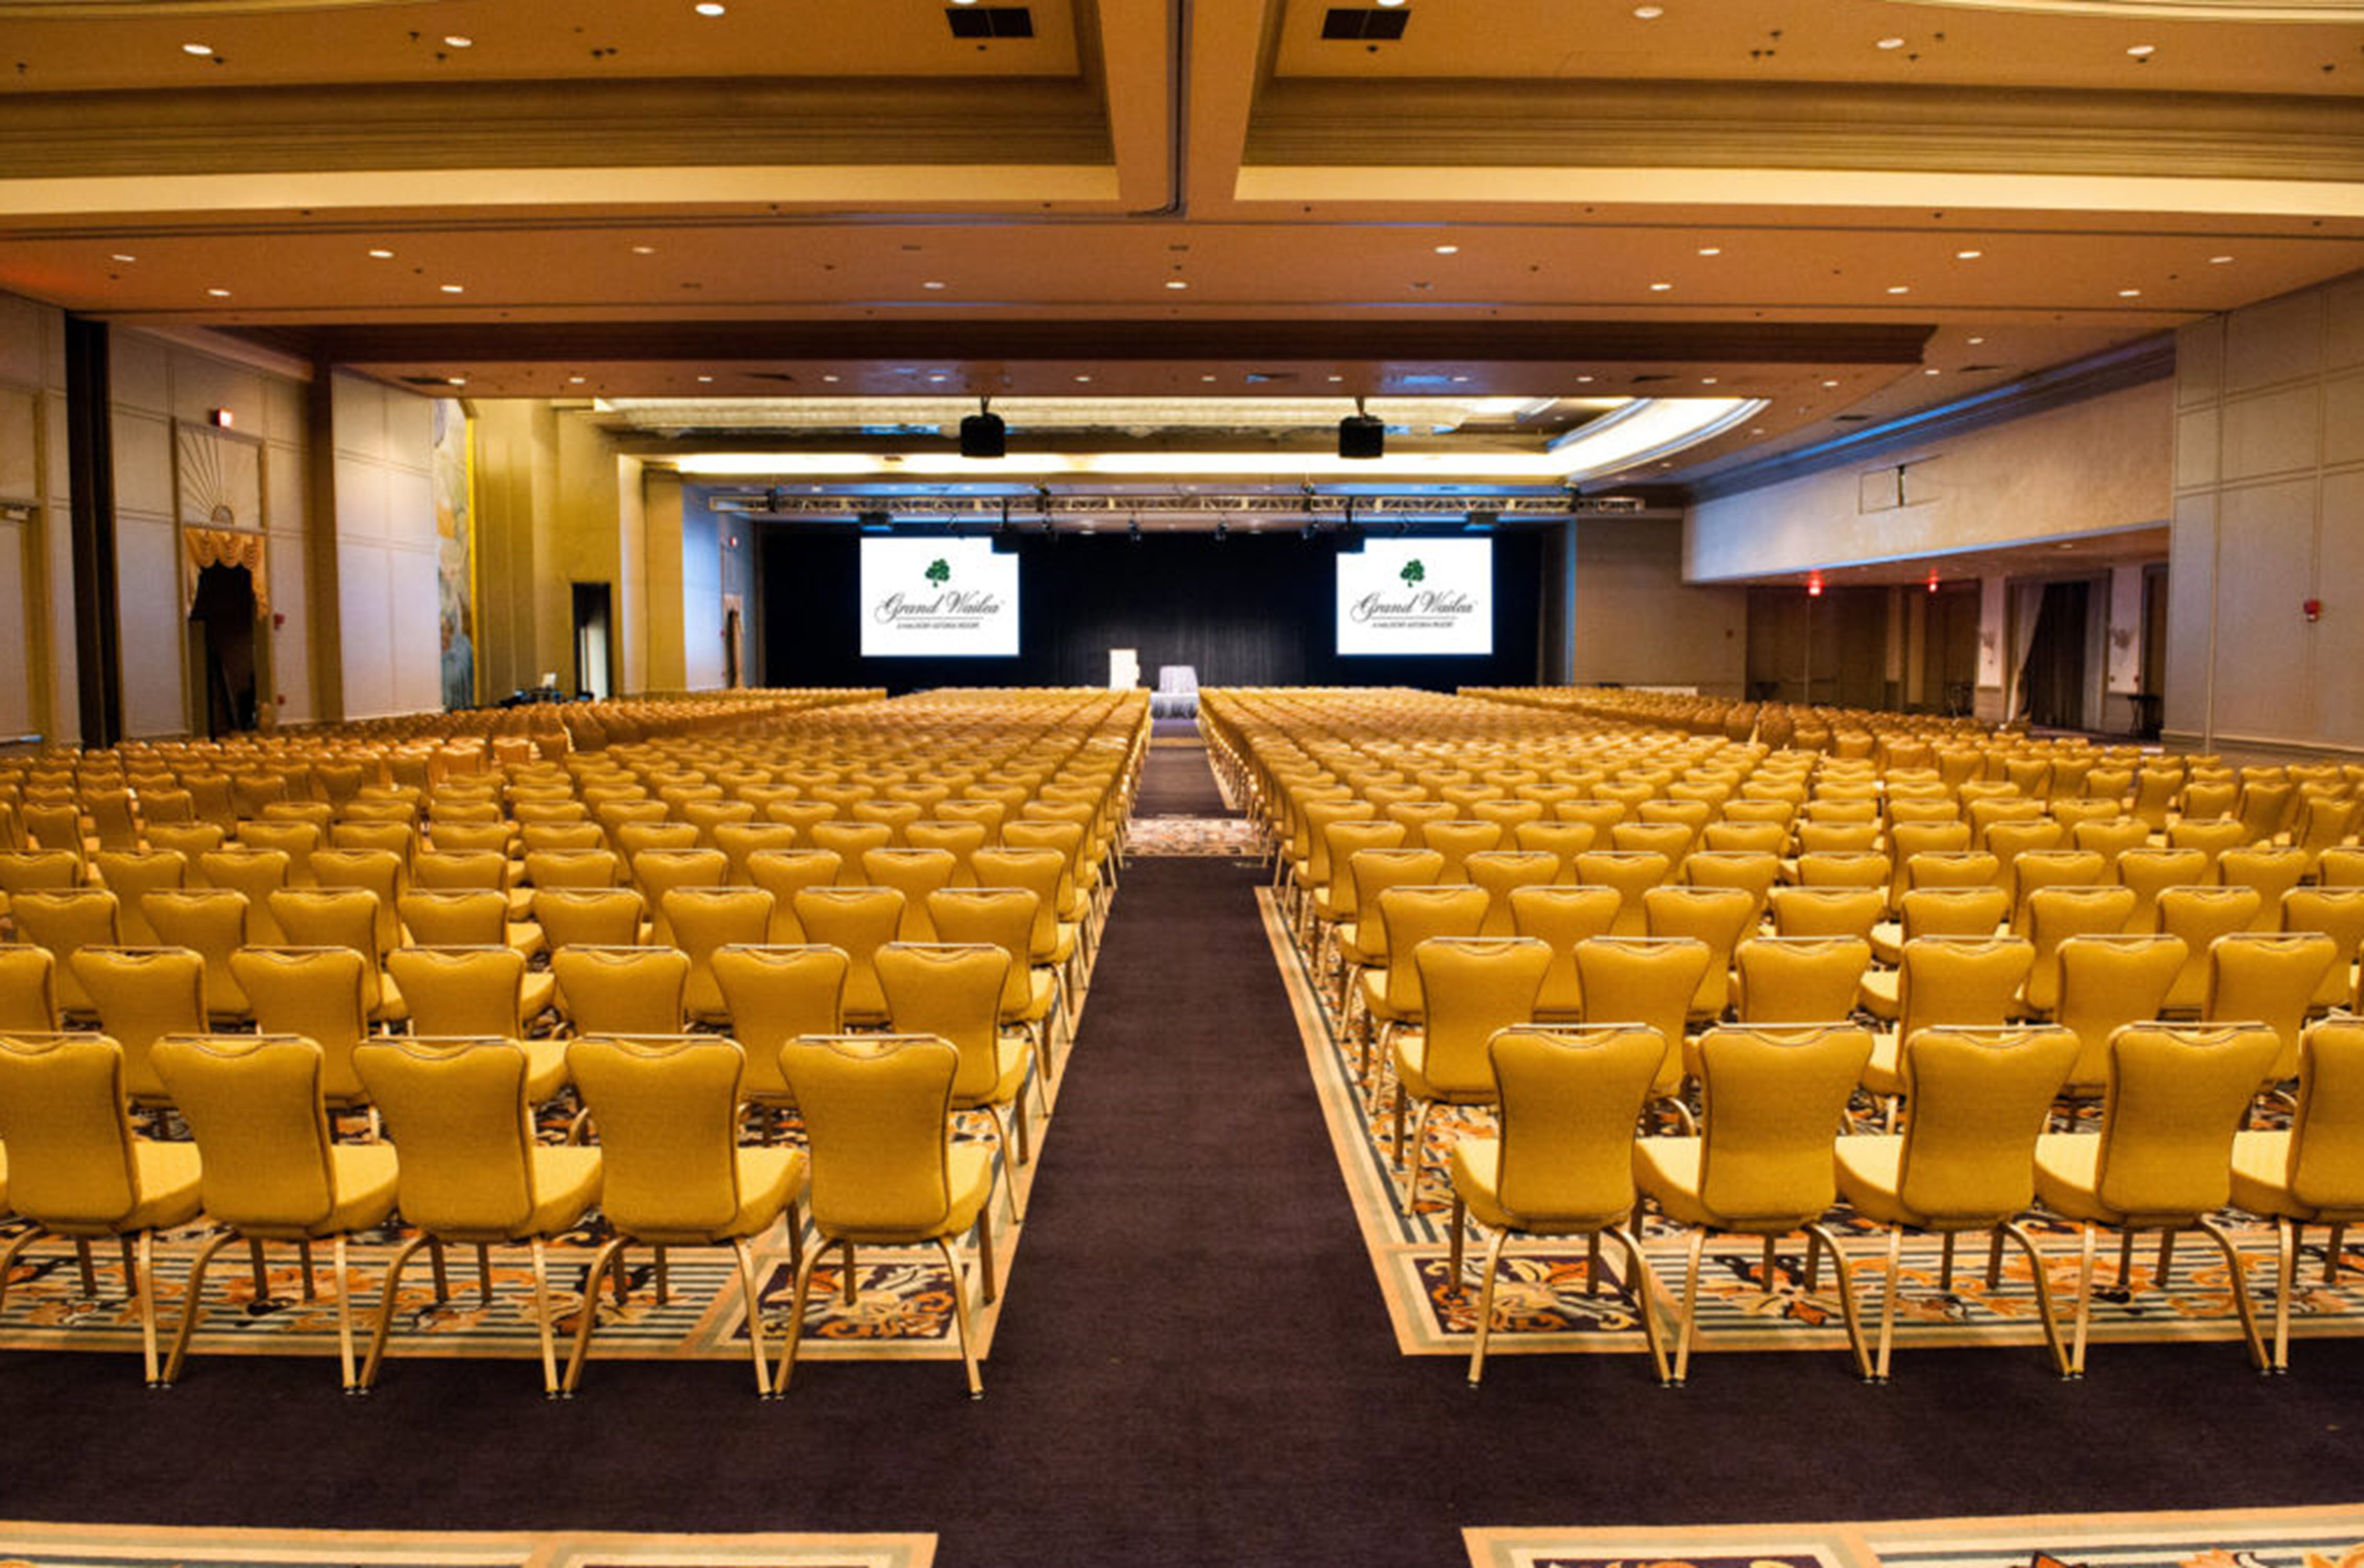 Haleakala Ballroom set up for a conference